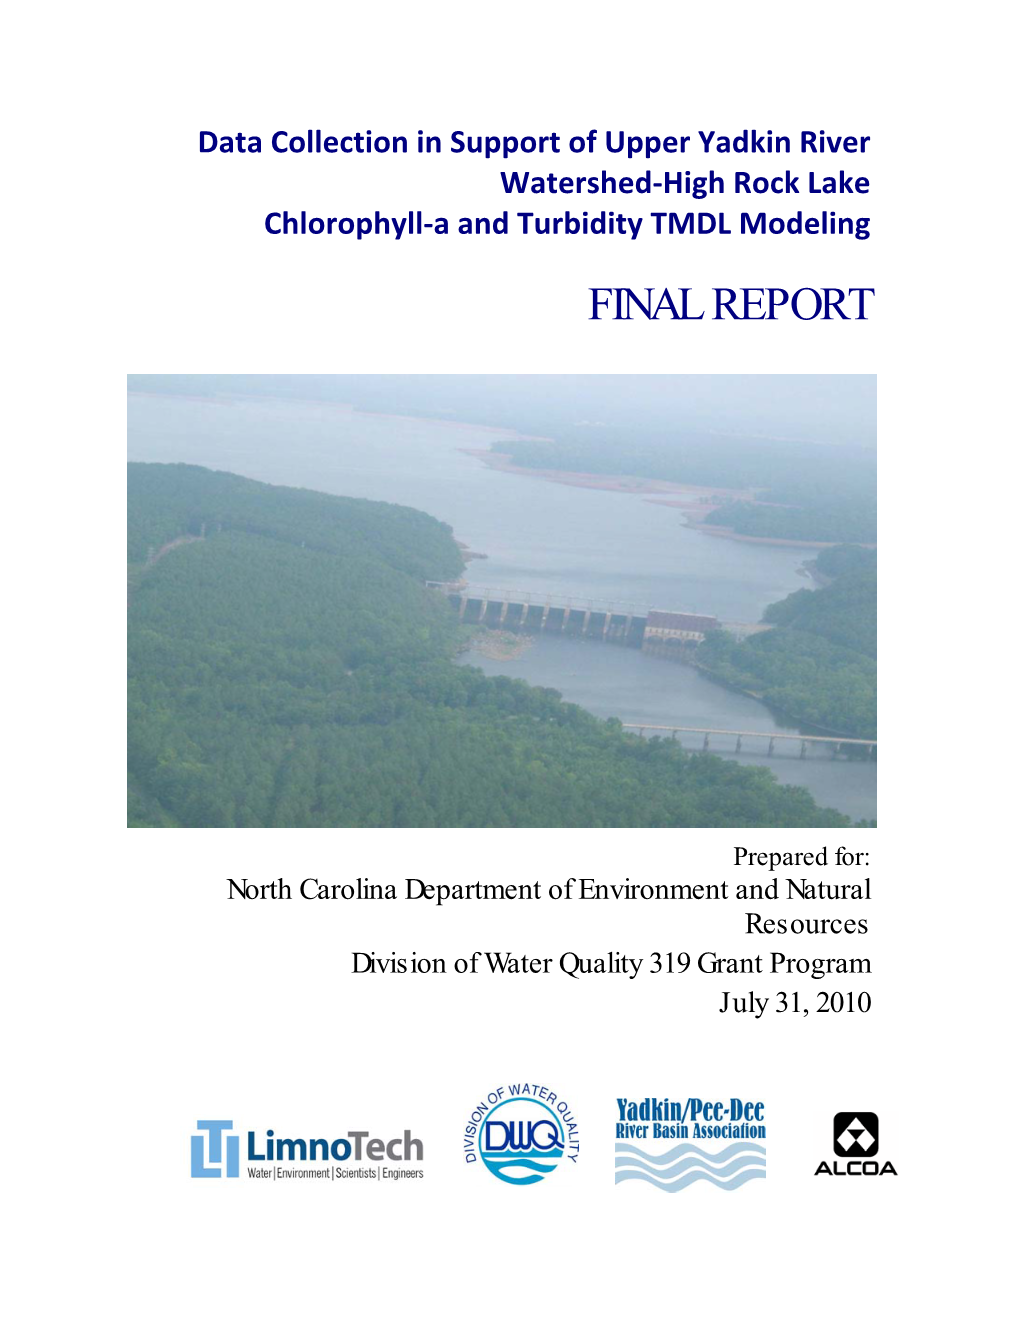 High Rock Lake TMDL Water Quality Monitoring Final Report July 31, 2010